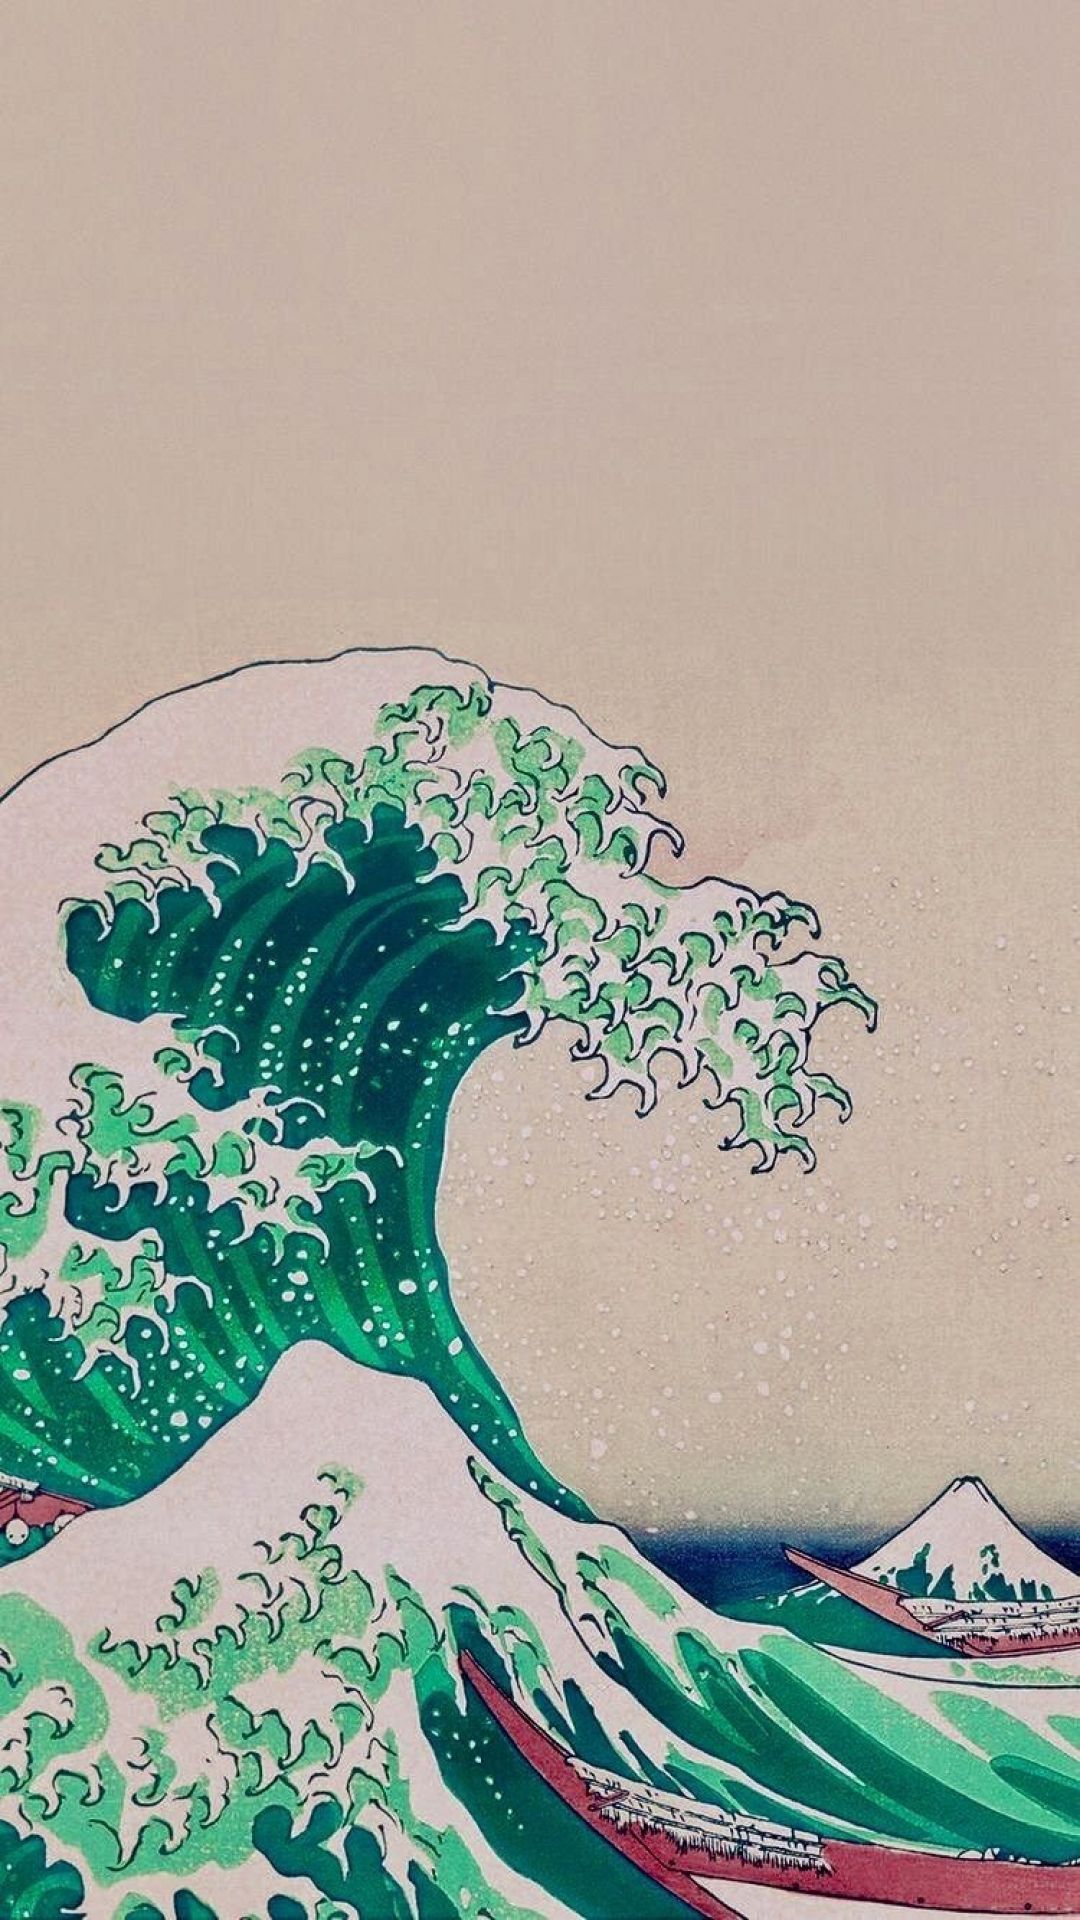 Green wave painting on a beige background - Vaporwave